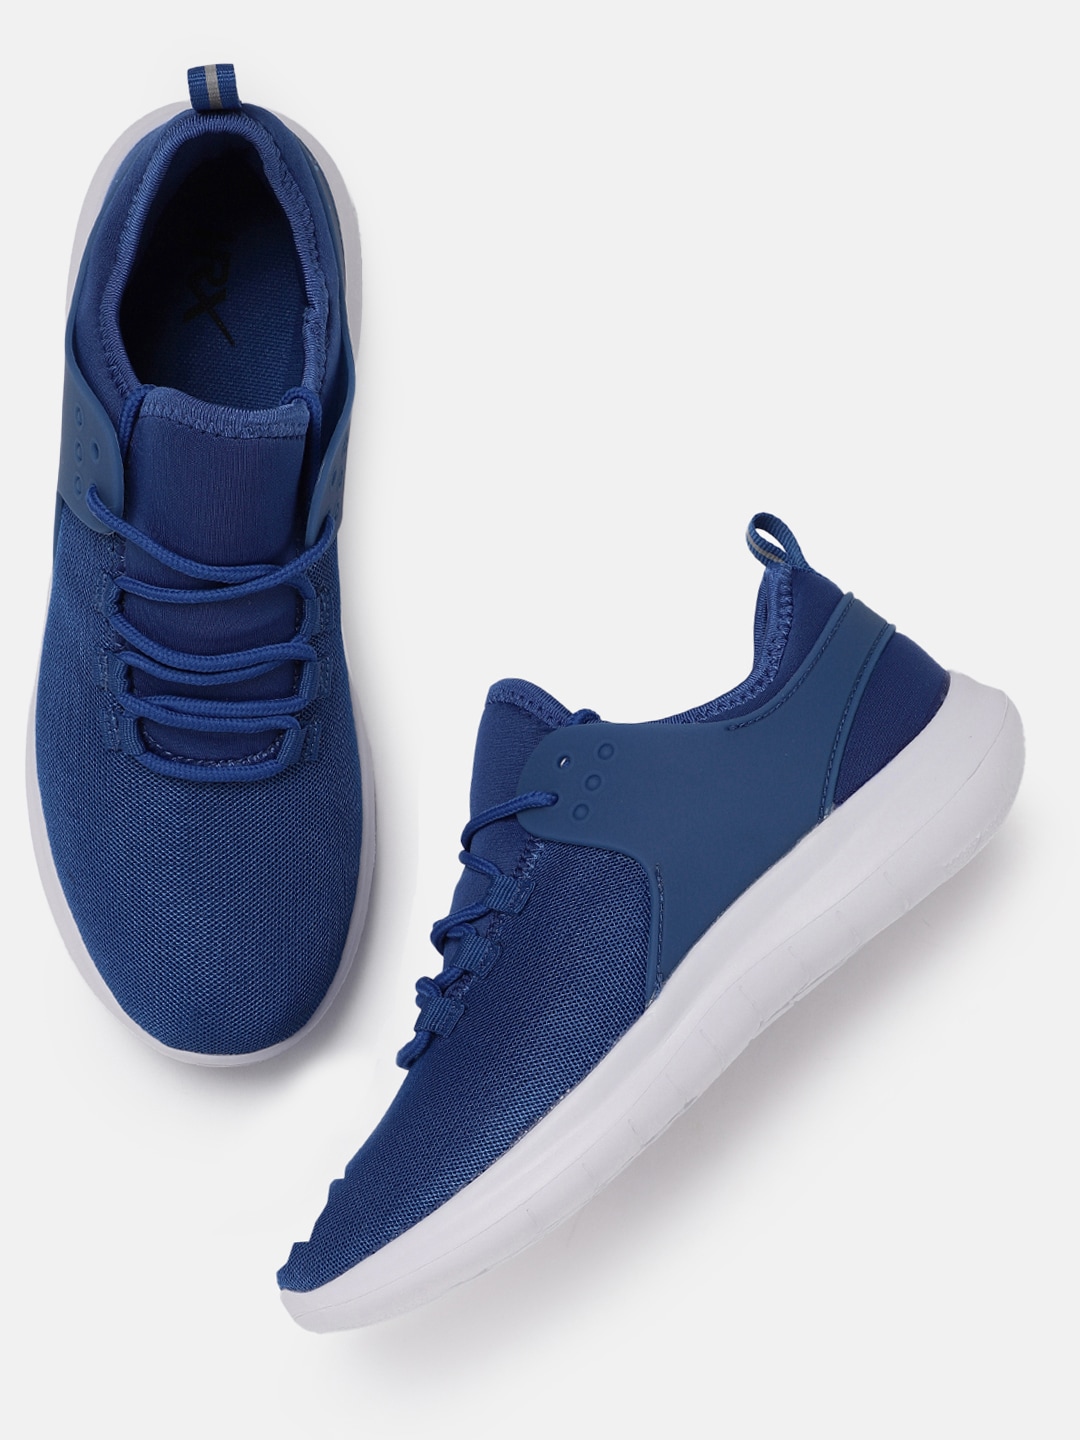 Hrx By Hrithik Roshan Aqua Blue Running Shoes for women - Get stylish ...